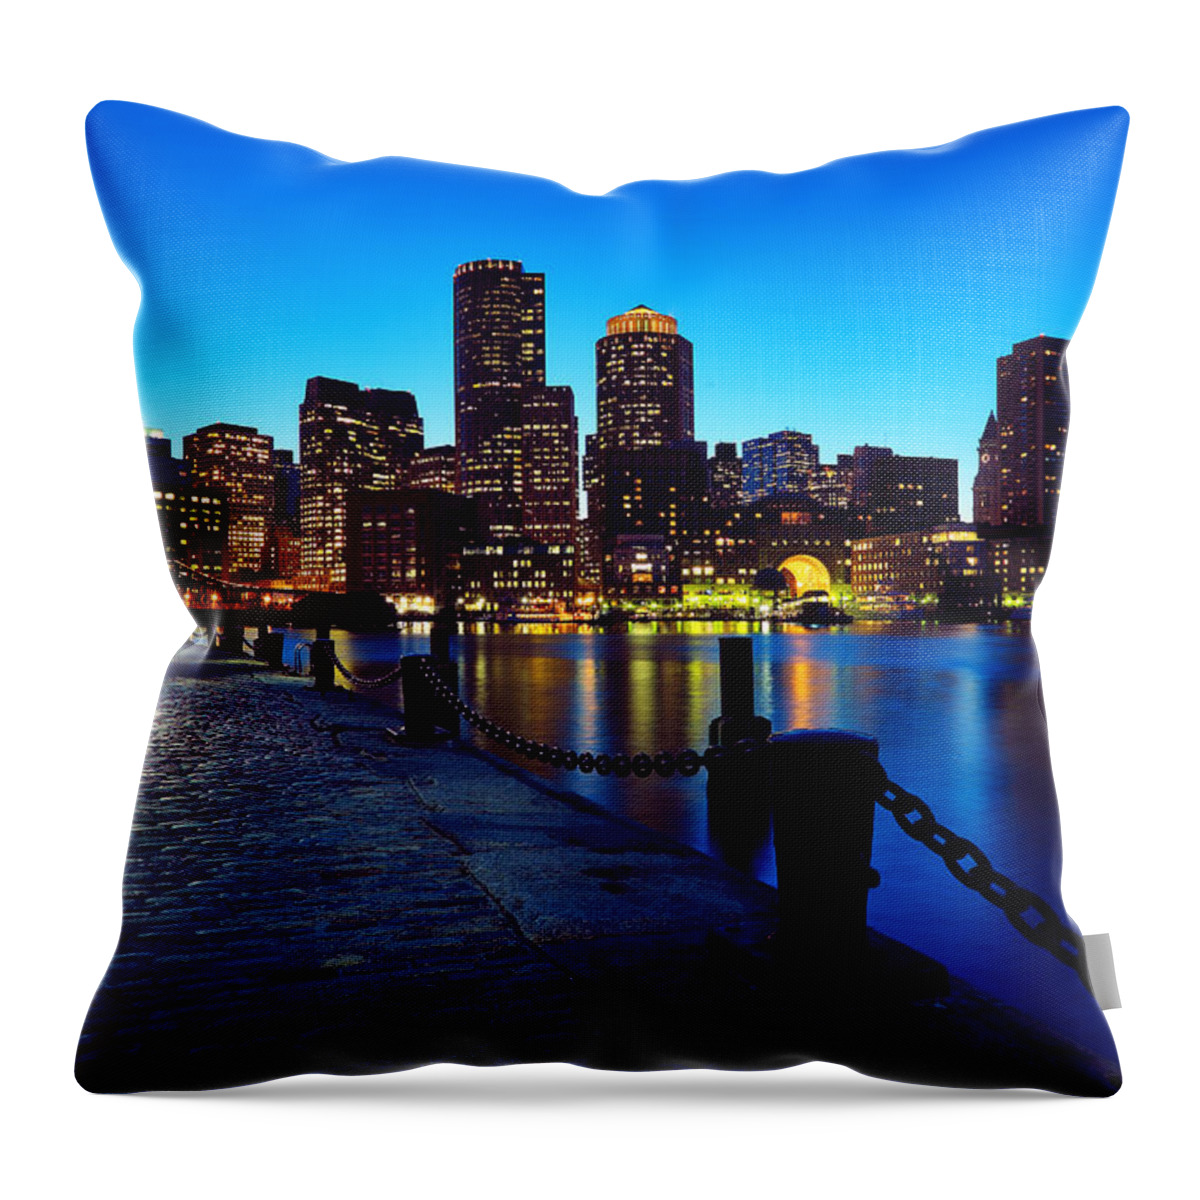 Boston Throw Pillow featuring the photograph Boston Harbor Walk by Rick Berk